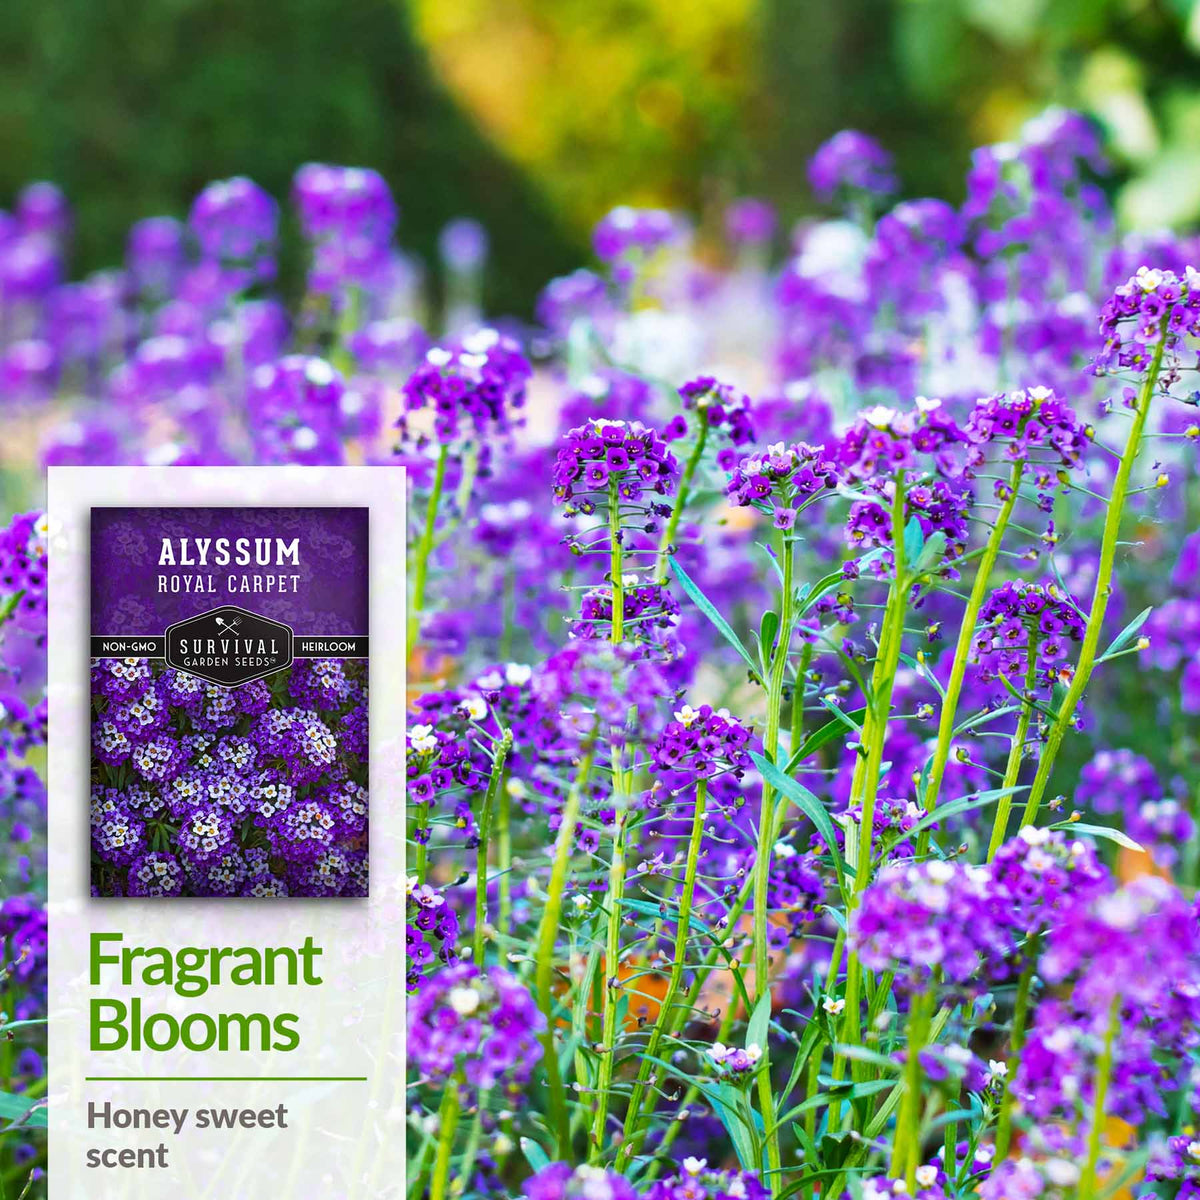 Fragrant Blooms - Honey sweet scent